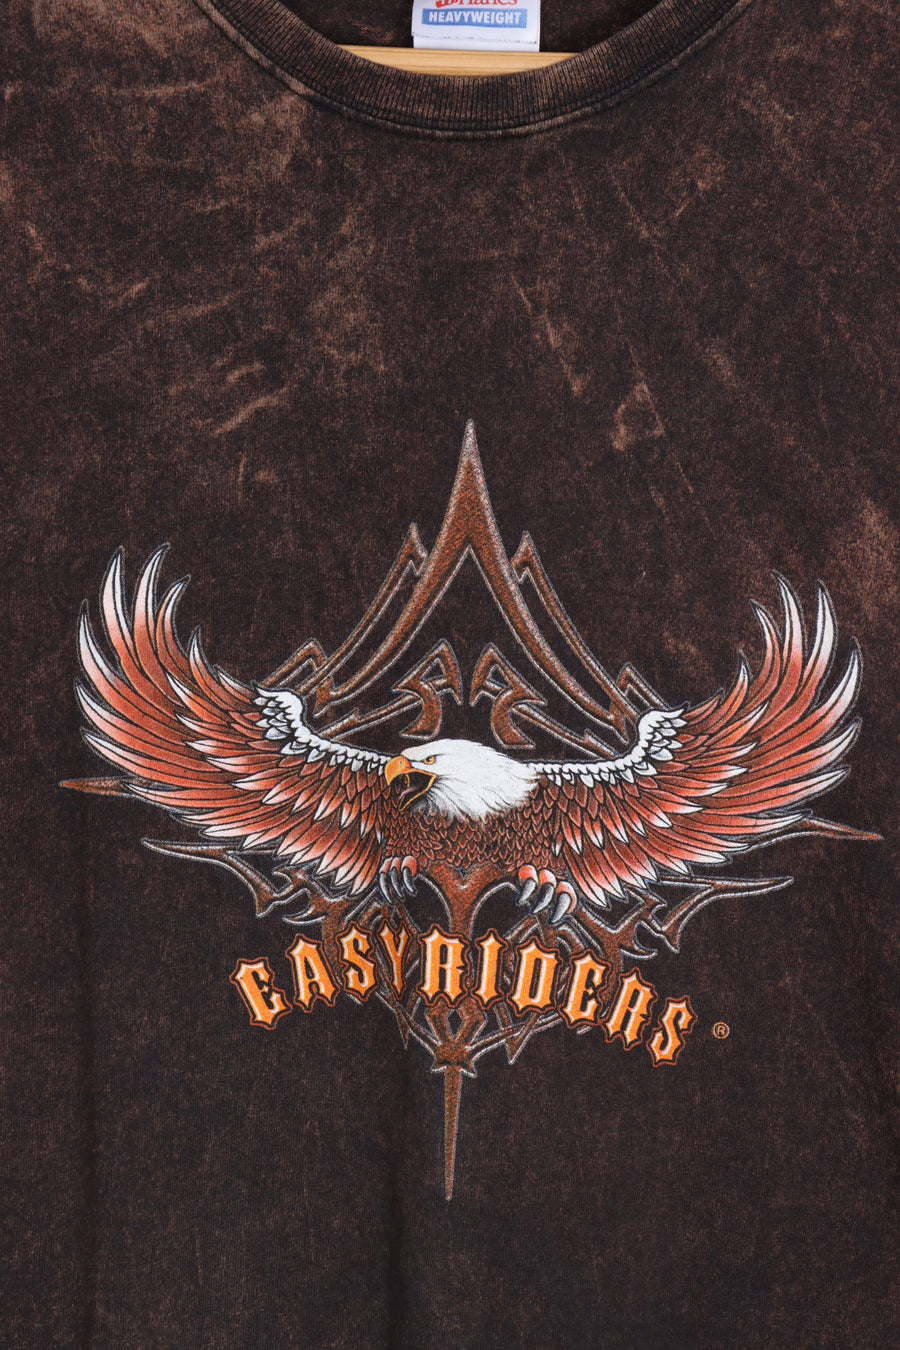 Easyriders Motorcycle Magazine Bald Eagle Rodeo Tour Acid Wash Tee (L-XL)